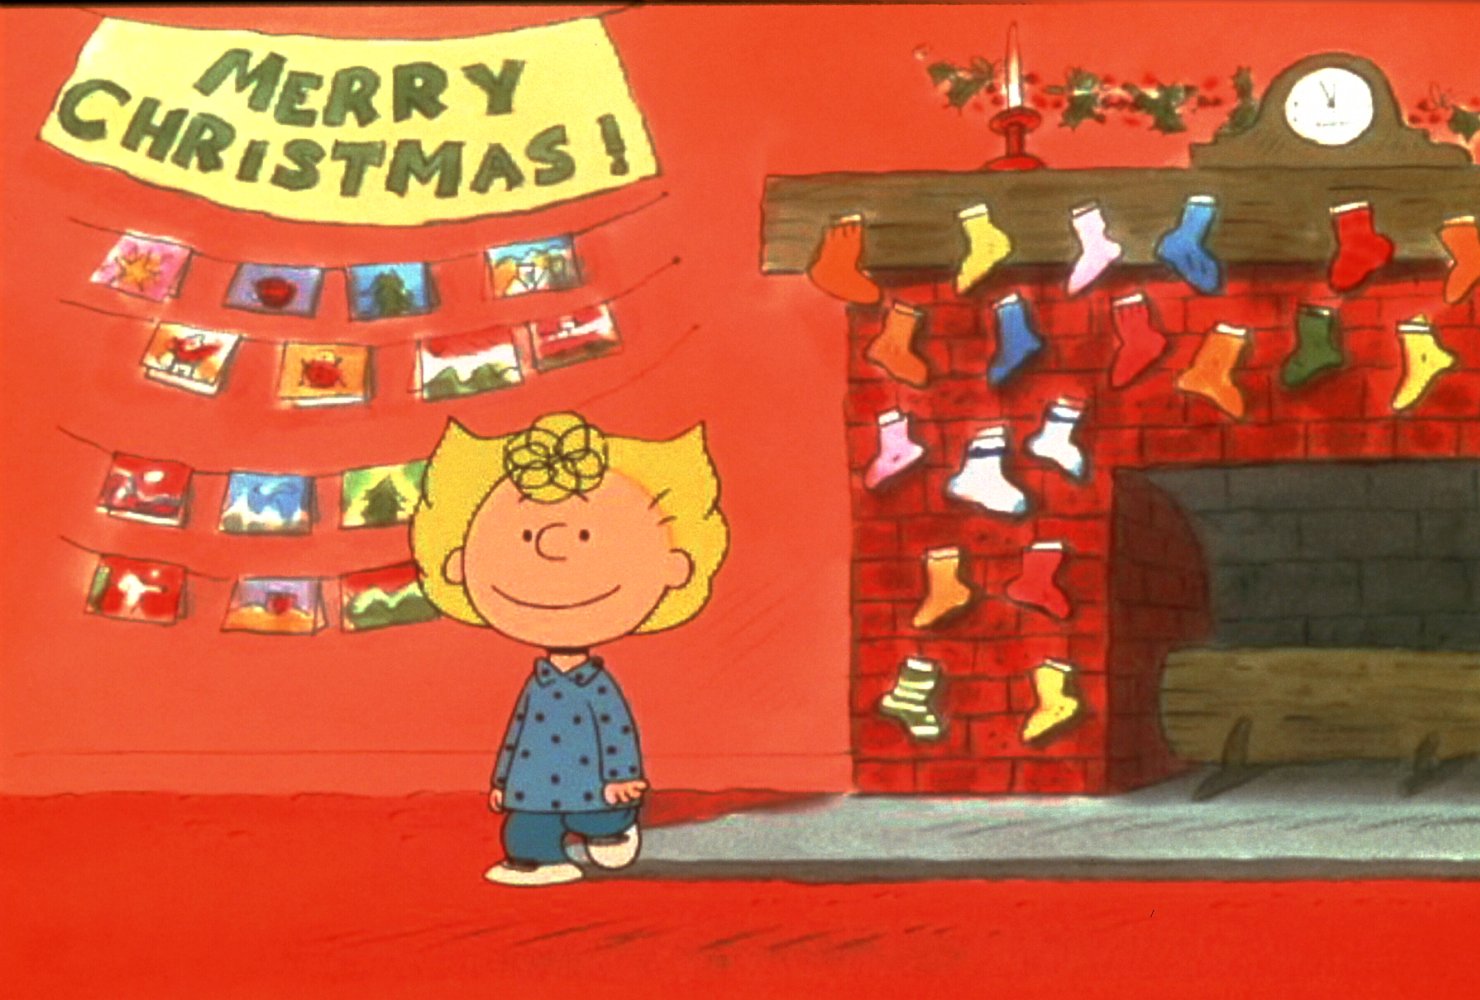 Charlie+Brown's-Christmas+Tales-movie+Review-3-Deborah+Reed-DebaDoTell